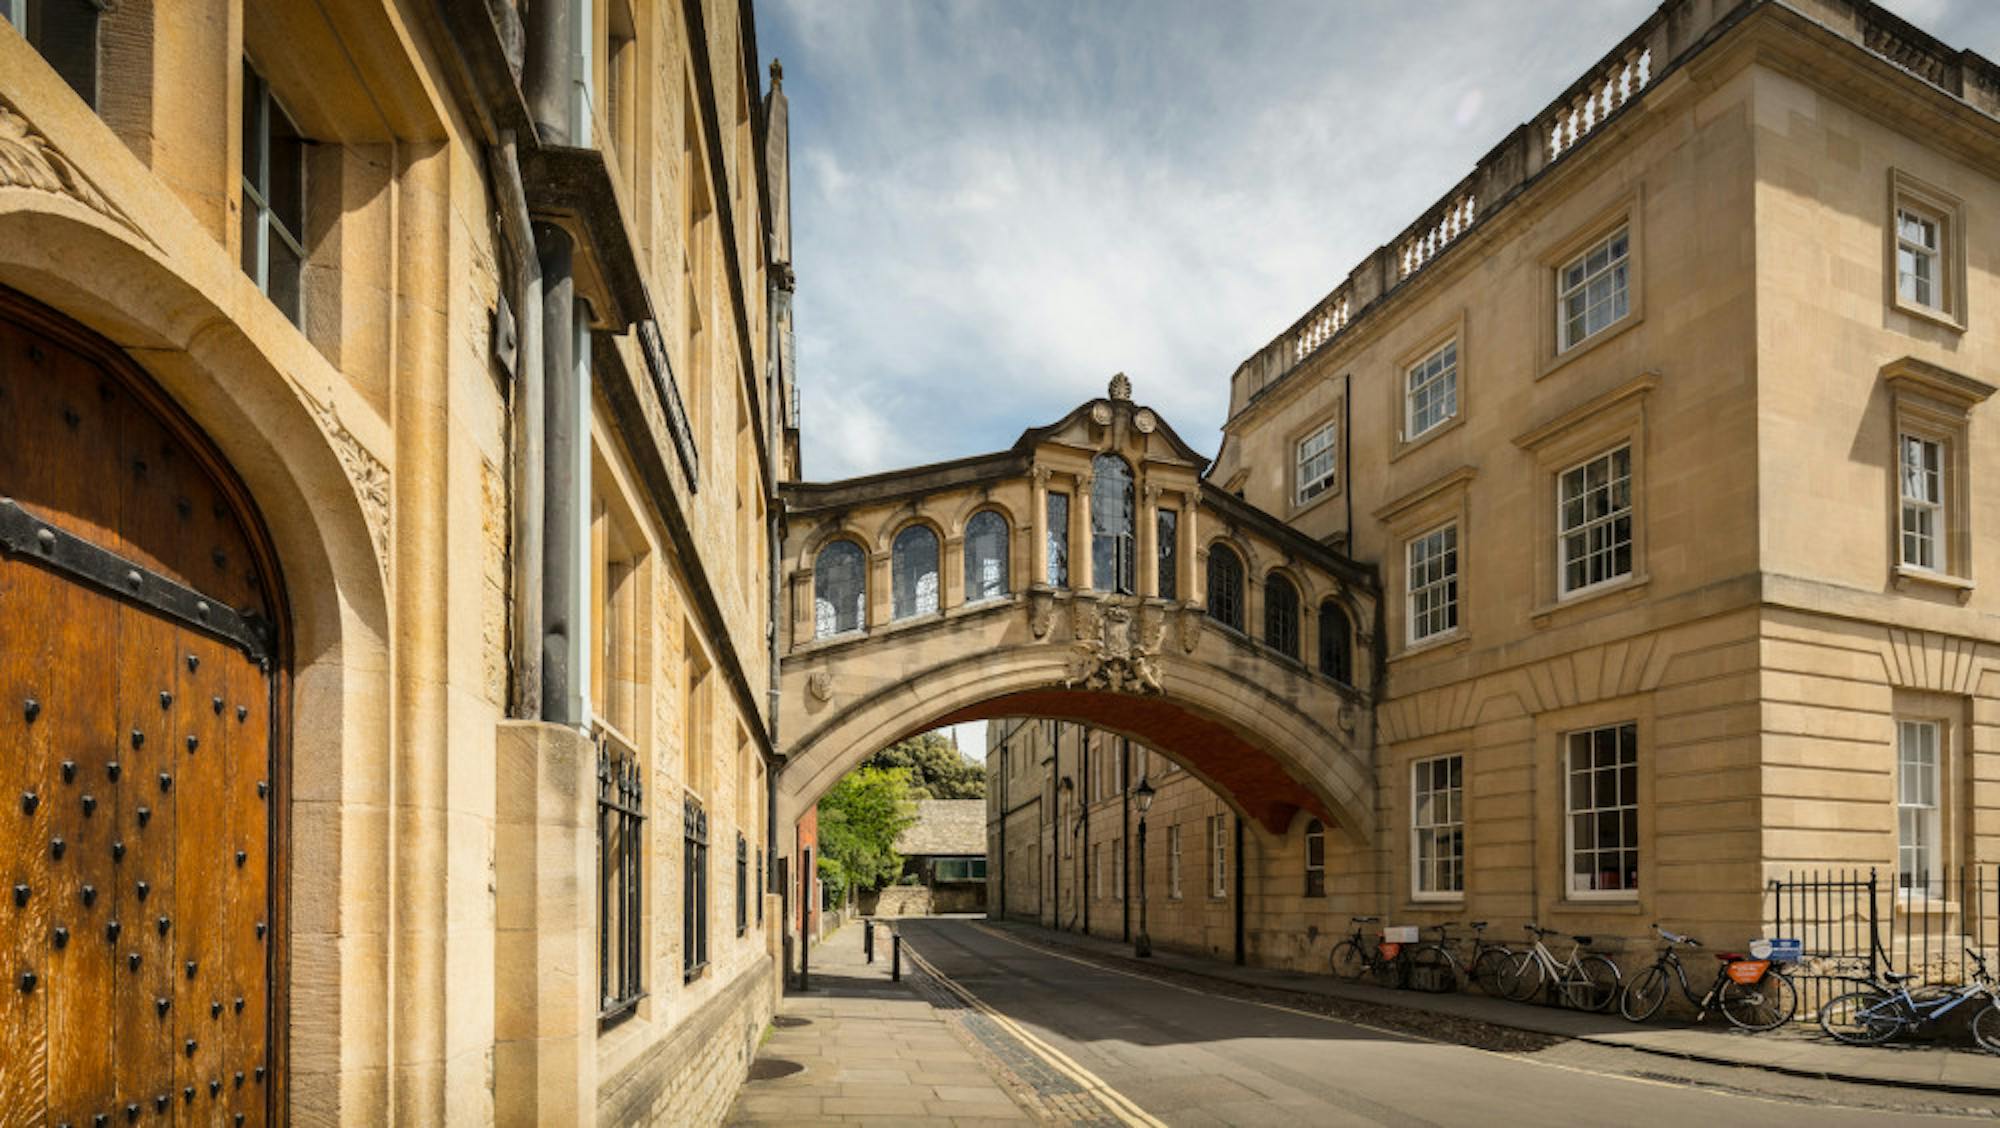 University_Of_Oxford_The_Bridge_Of_Sighs